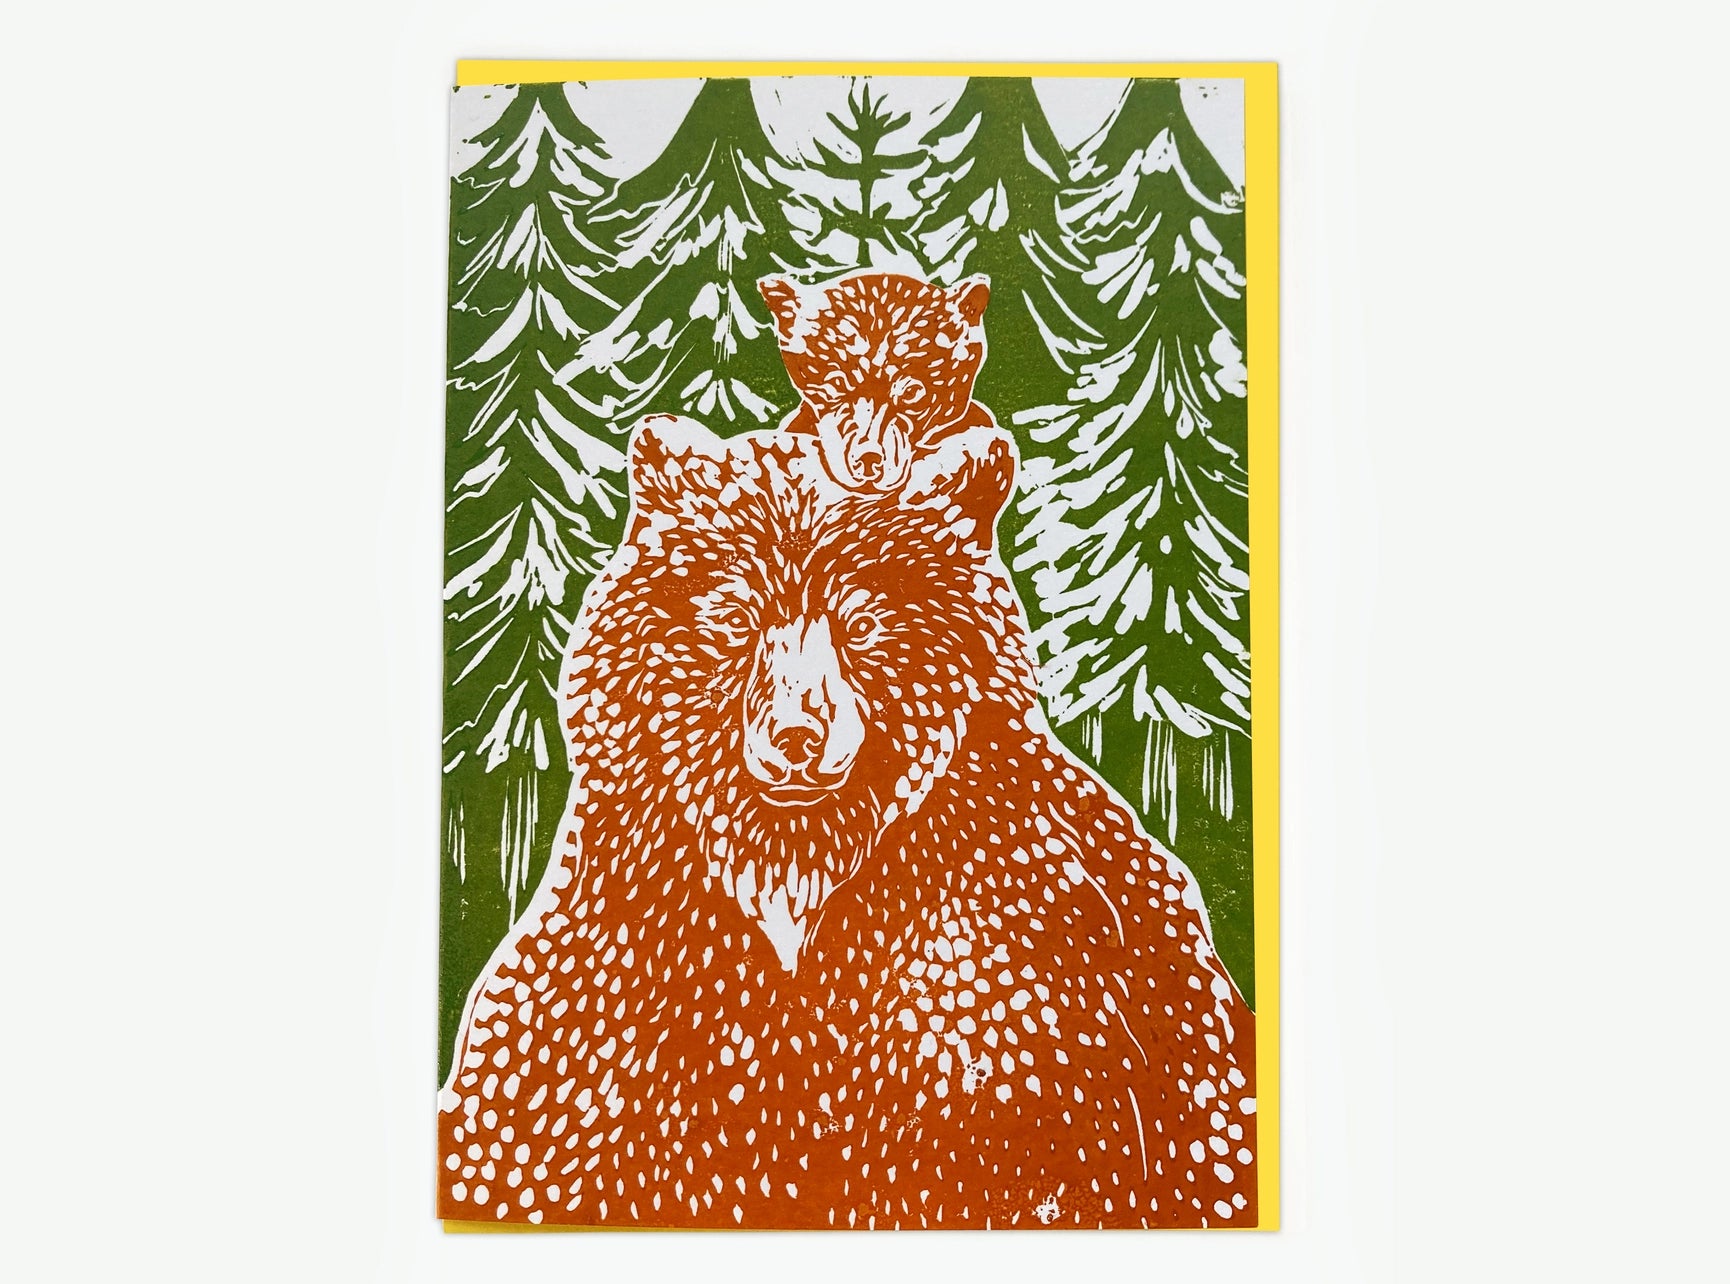 Bear and Cub Block Printed Greeting Card